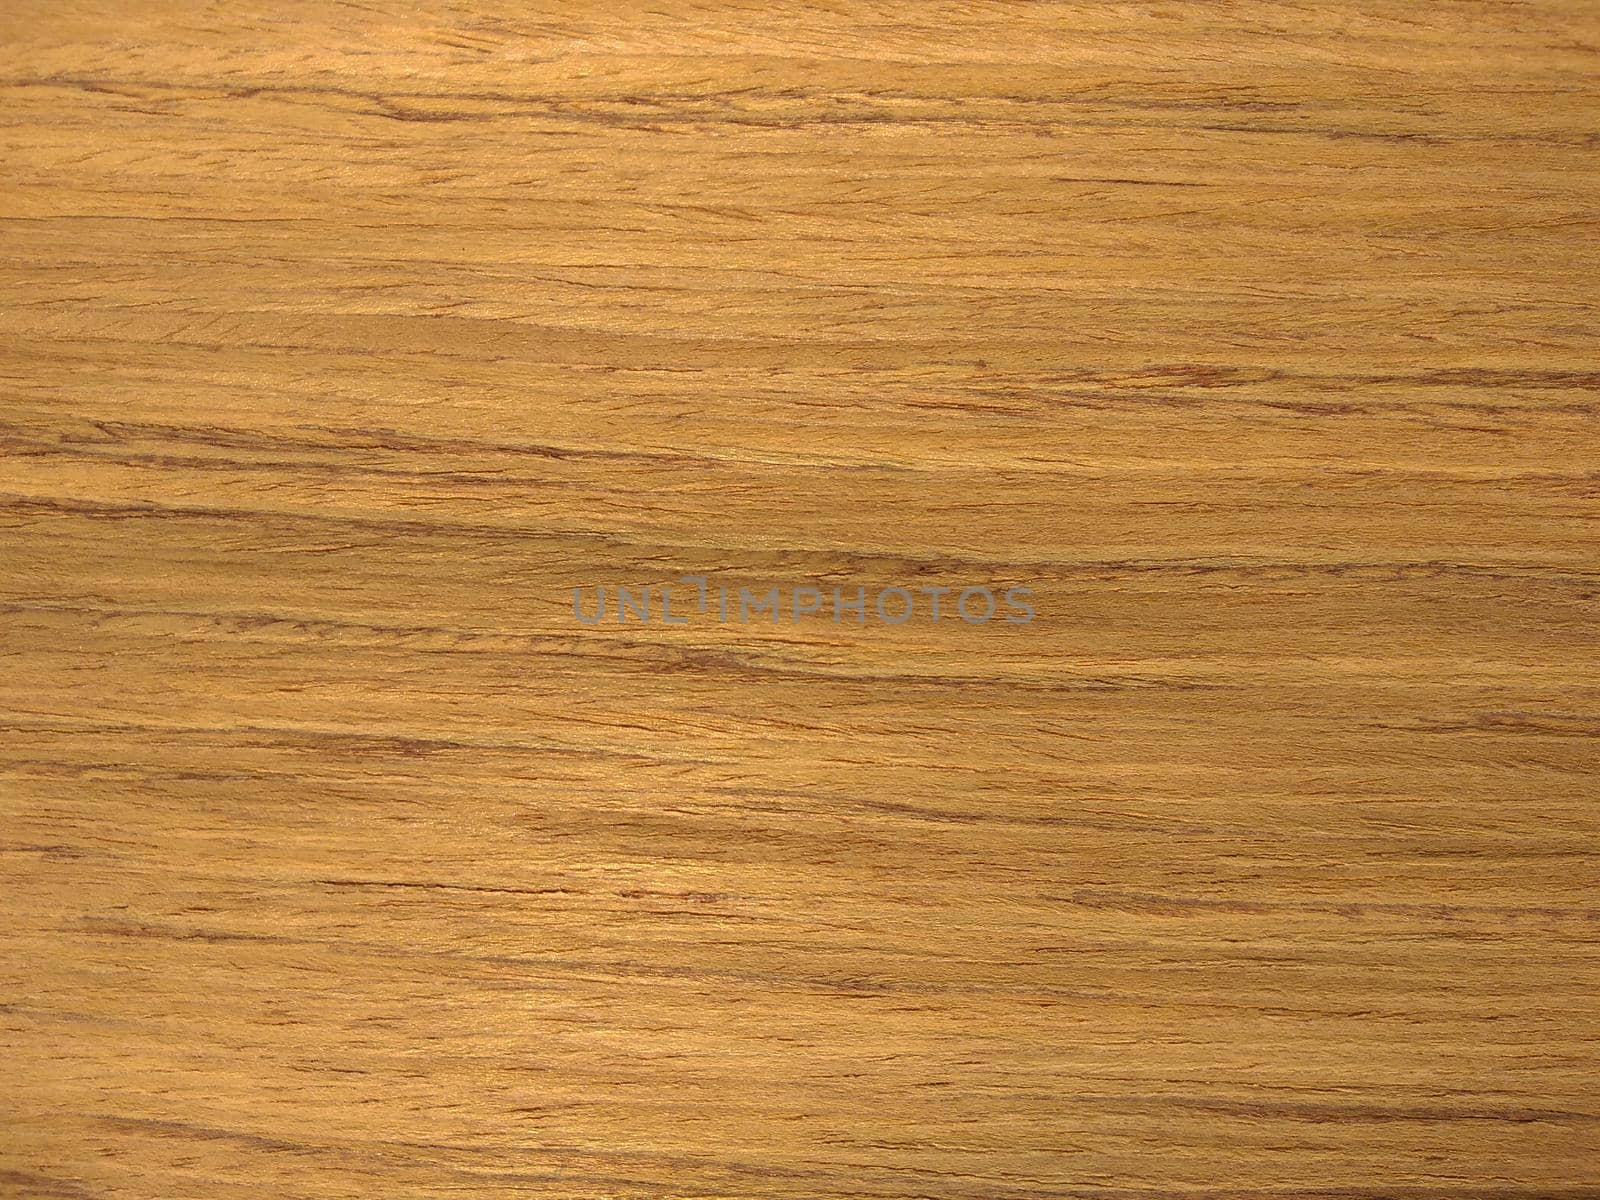 Natural Dark burma teak wood veneer close up image. natural textured slices of wood.